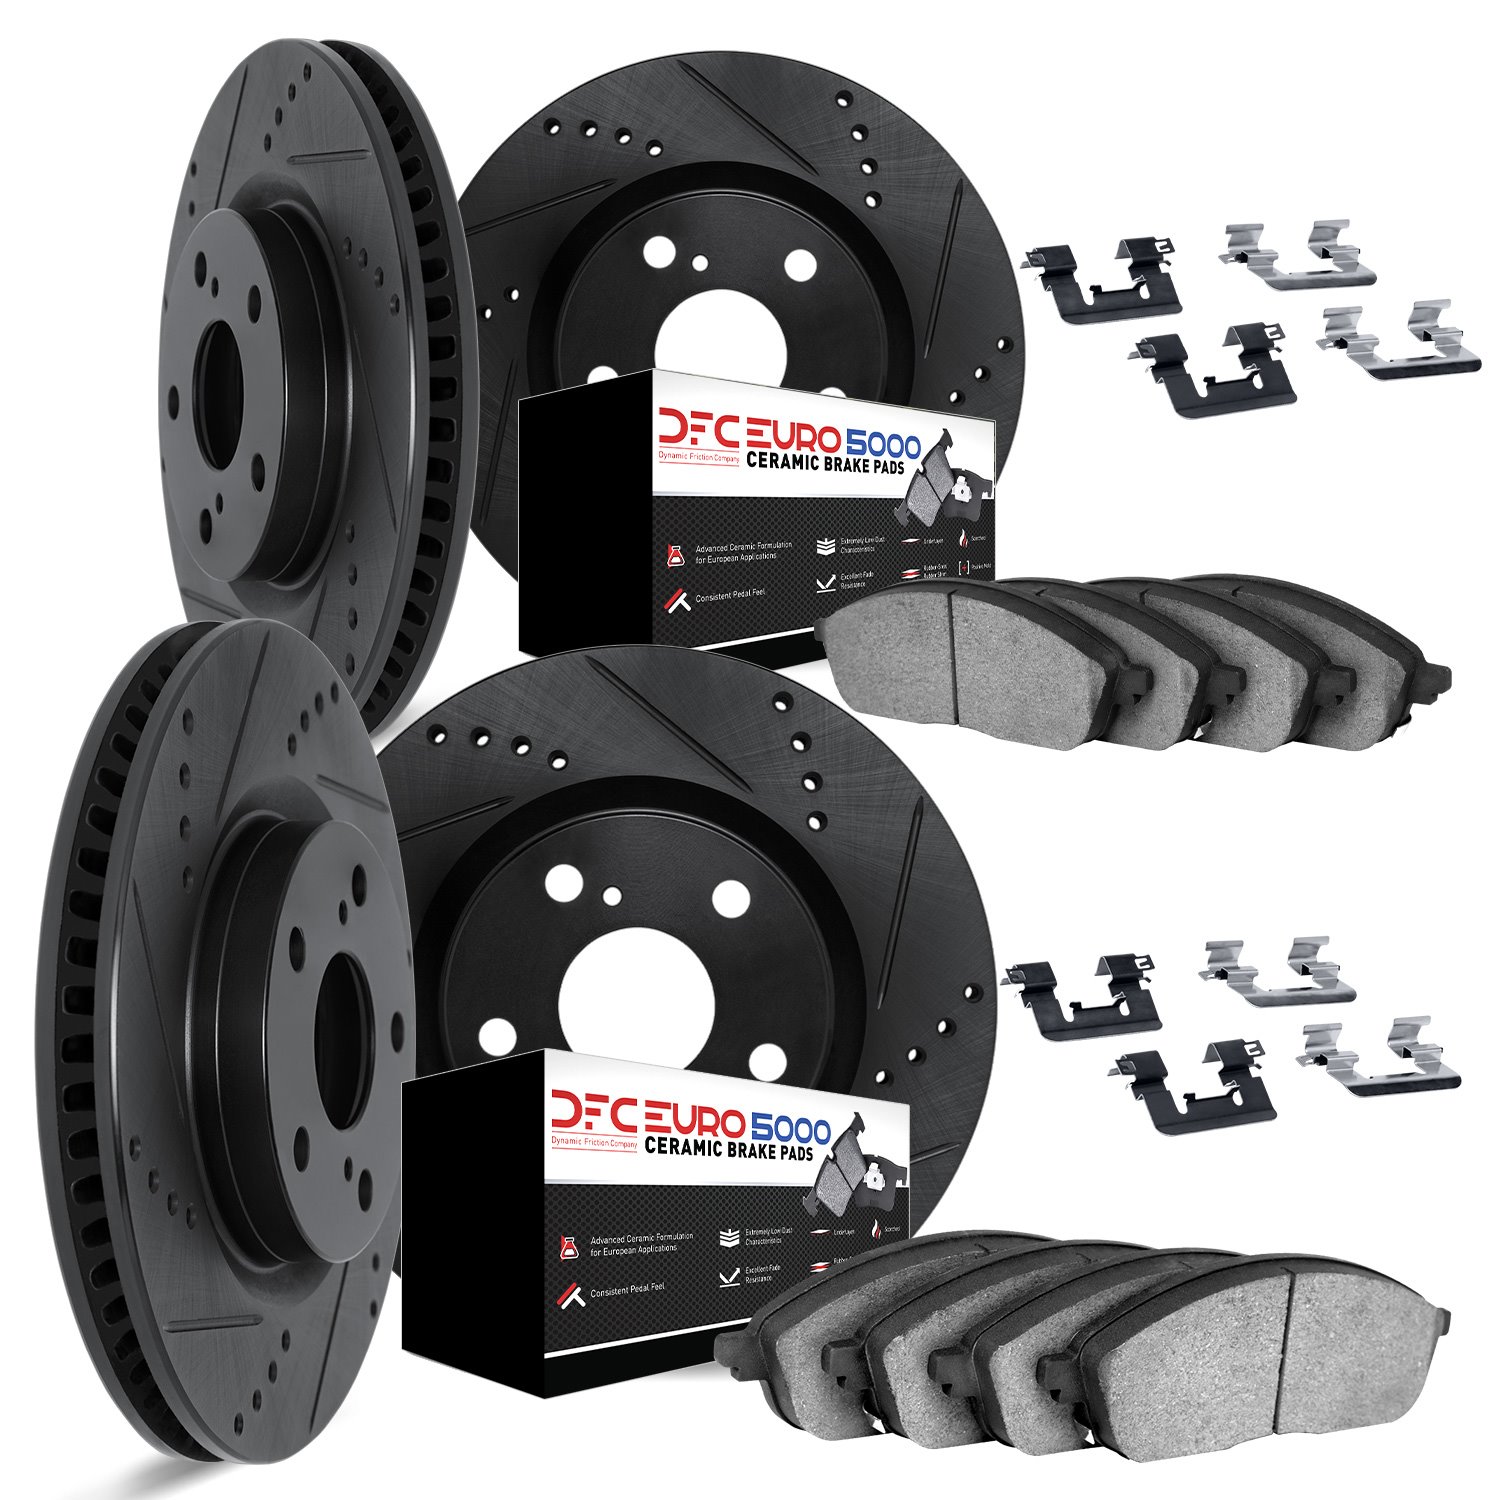 8614-75002 Drilled/Slotted Brake Rotors w/5000 Euro Ceramic Brake Pads Kit & Hardware [Black], Fits Select Lexus/Toyota/Scion, P